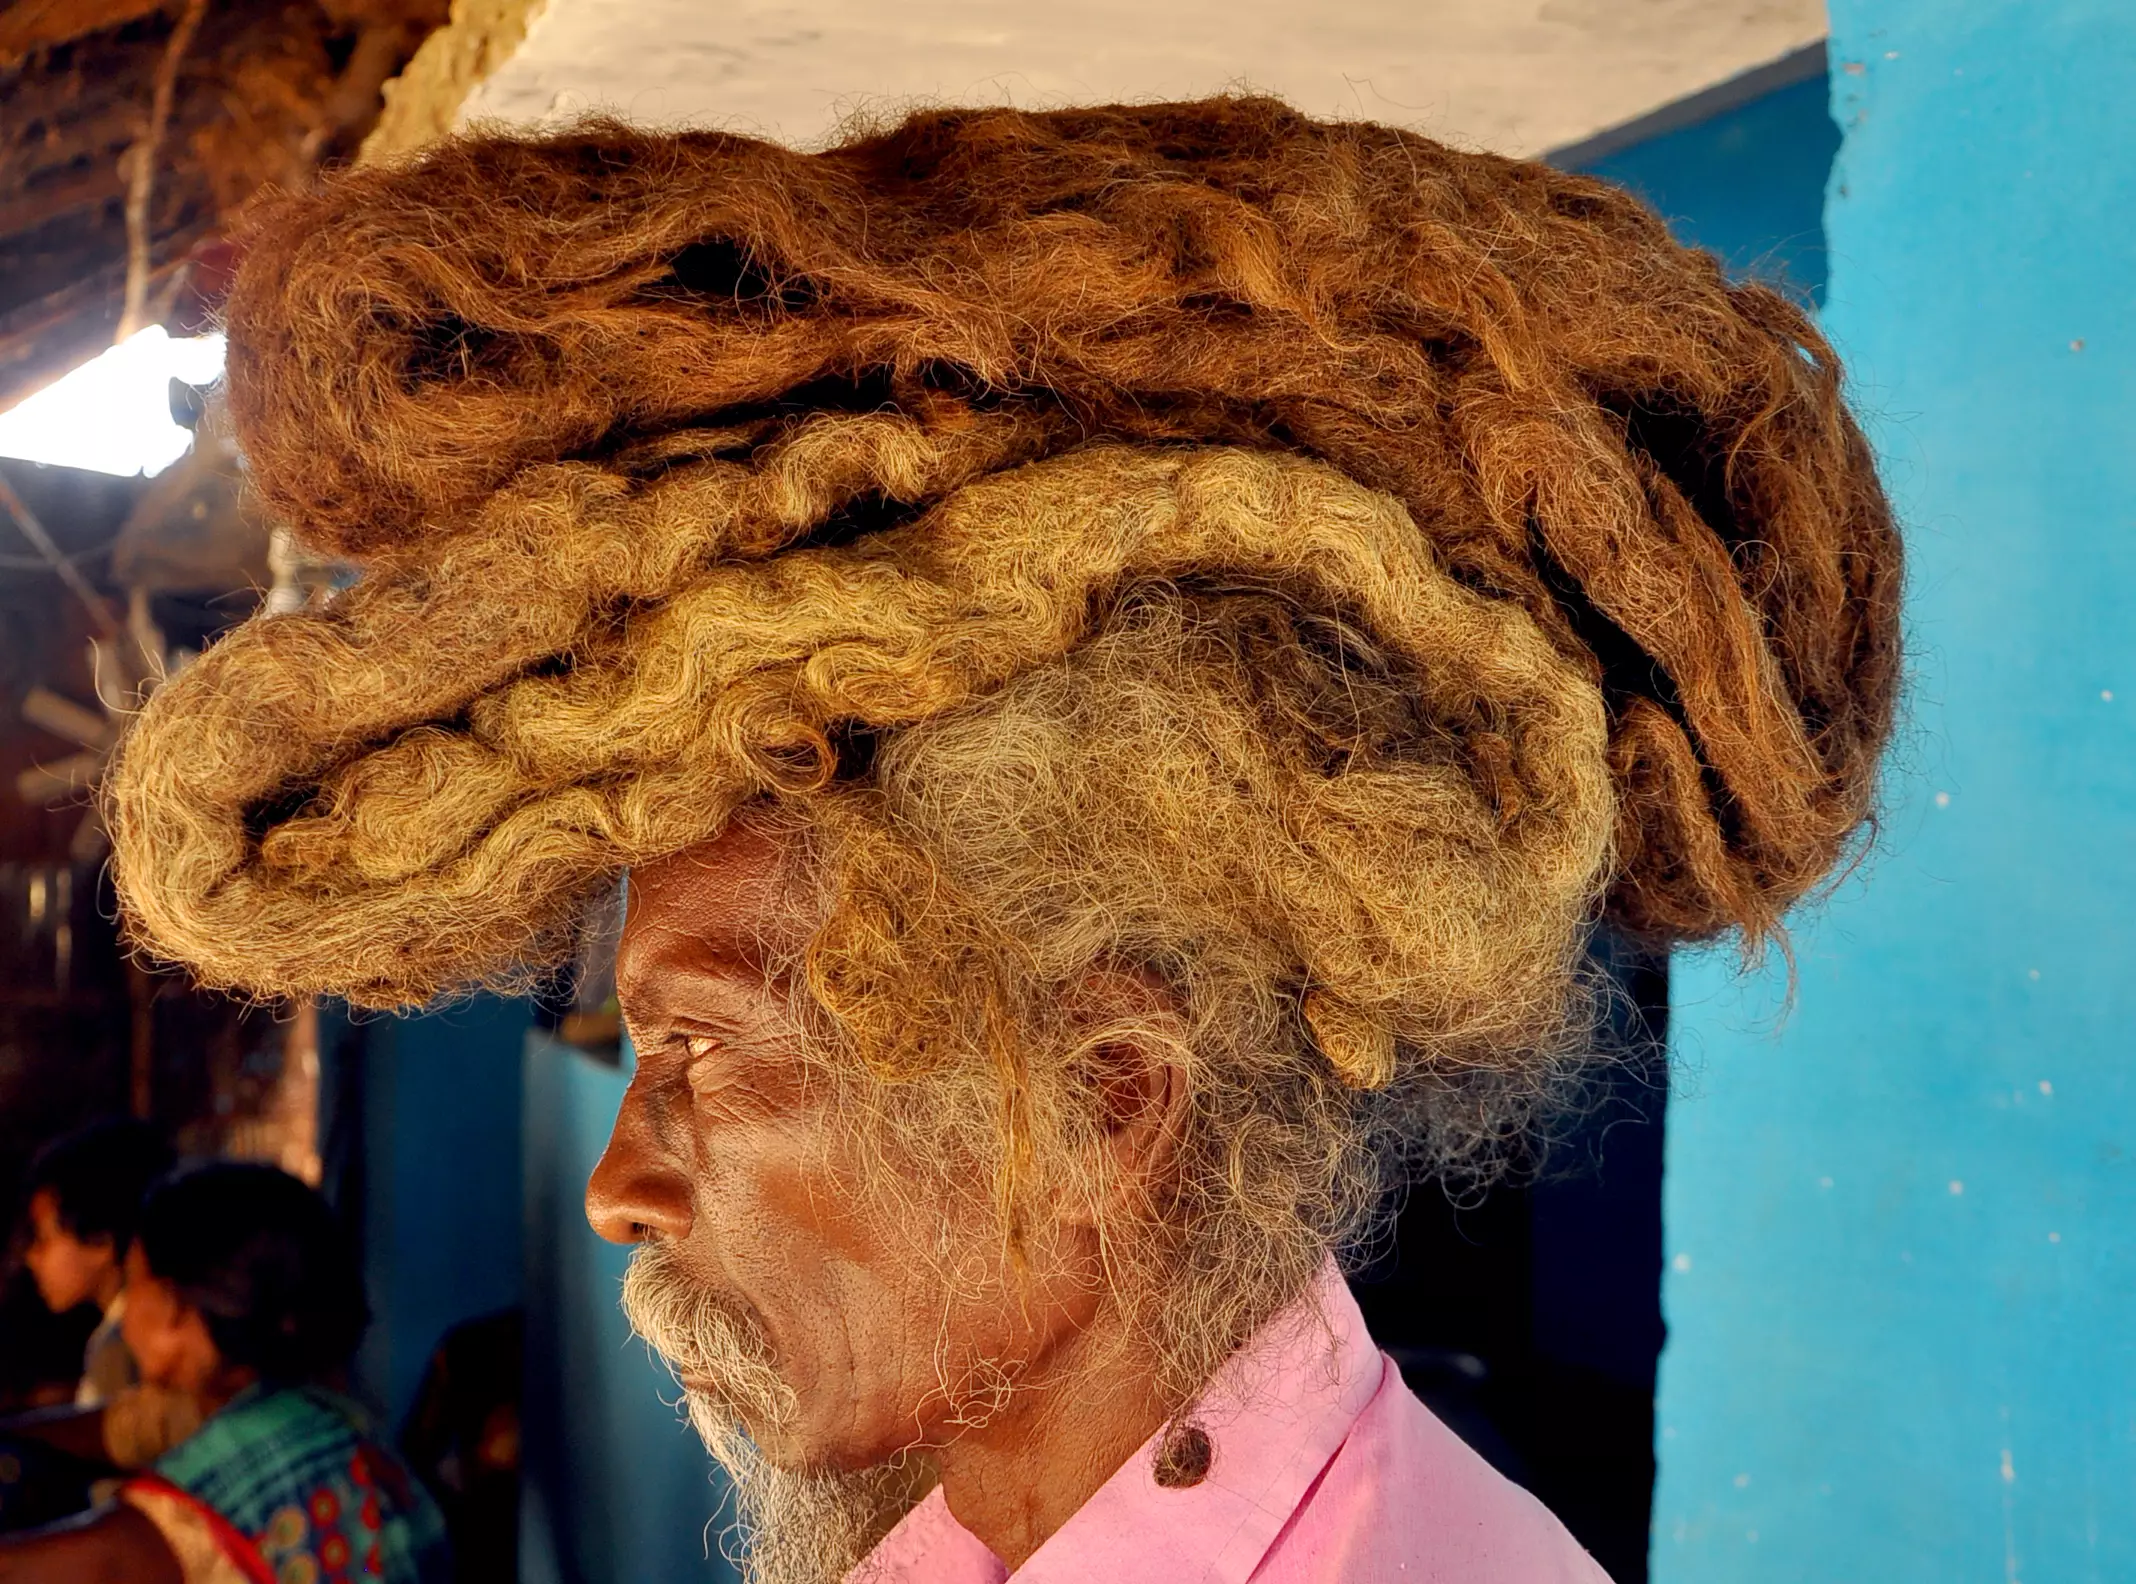 Sakal Dev Tuddu hasn't washed his dreads in 40 years.